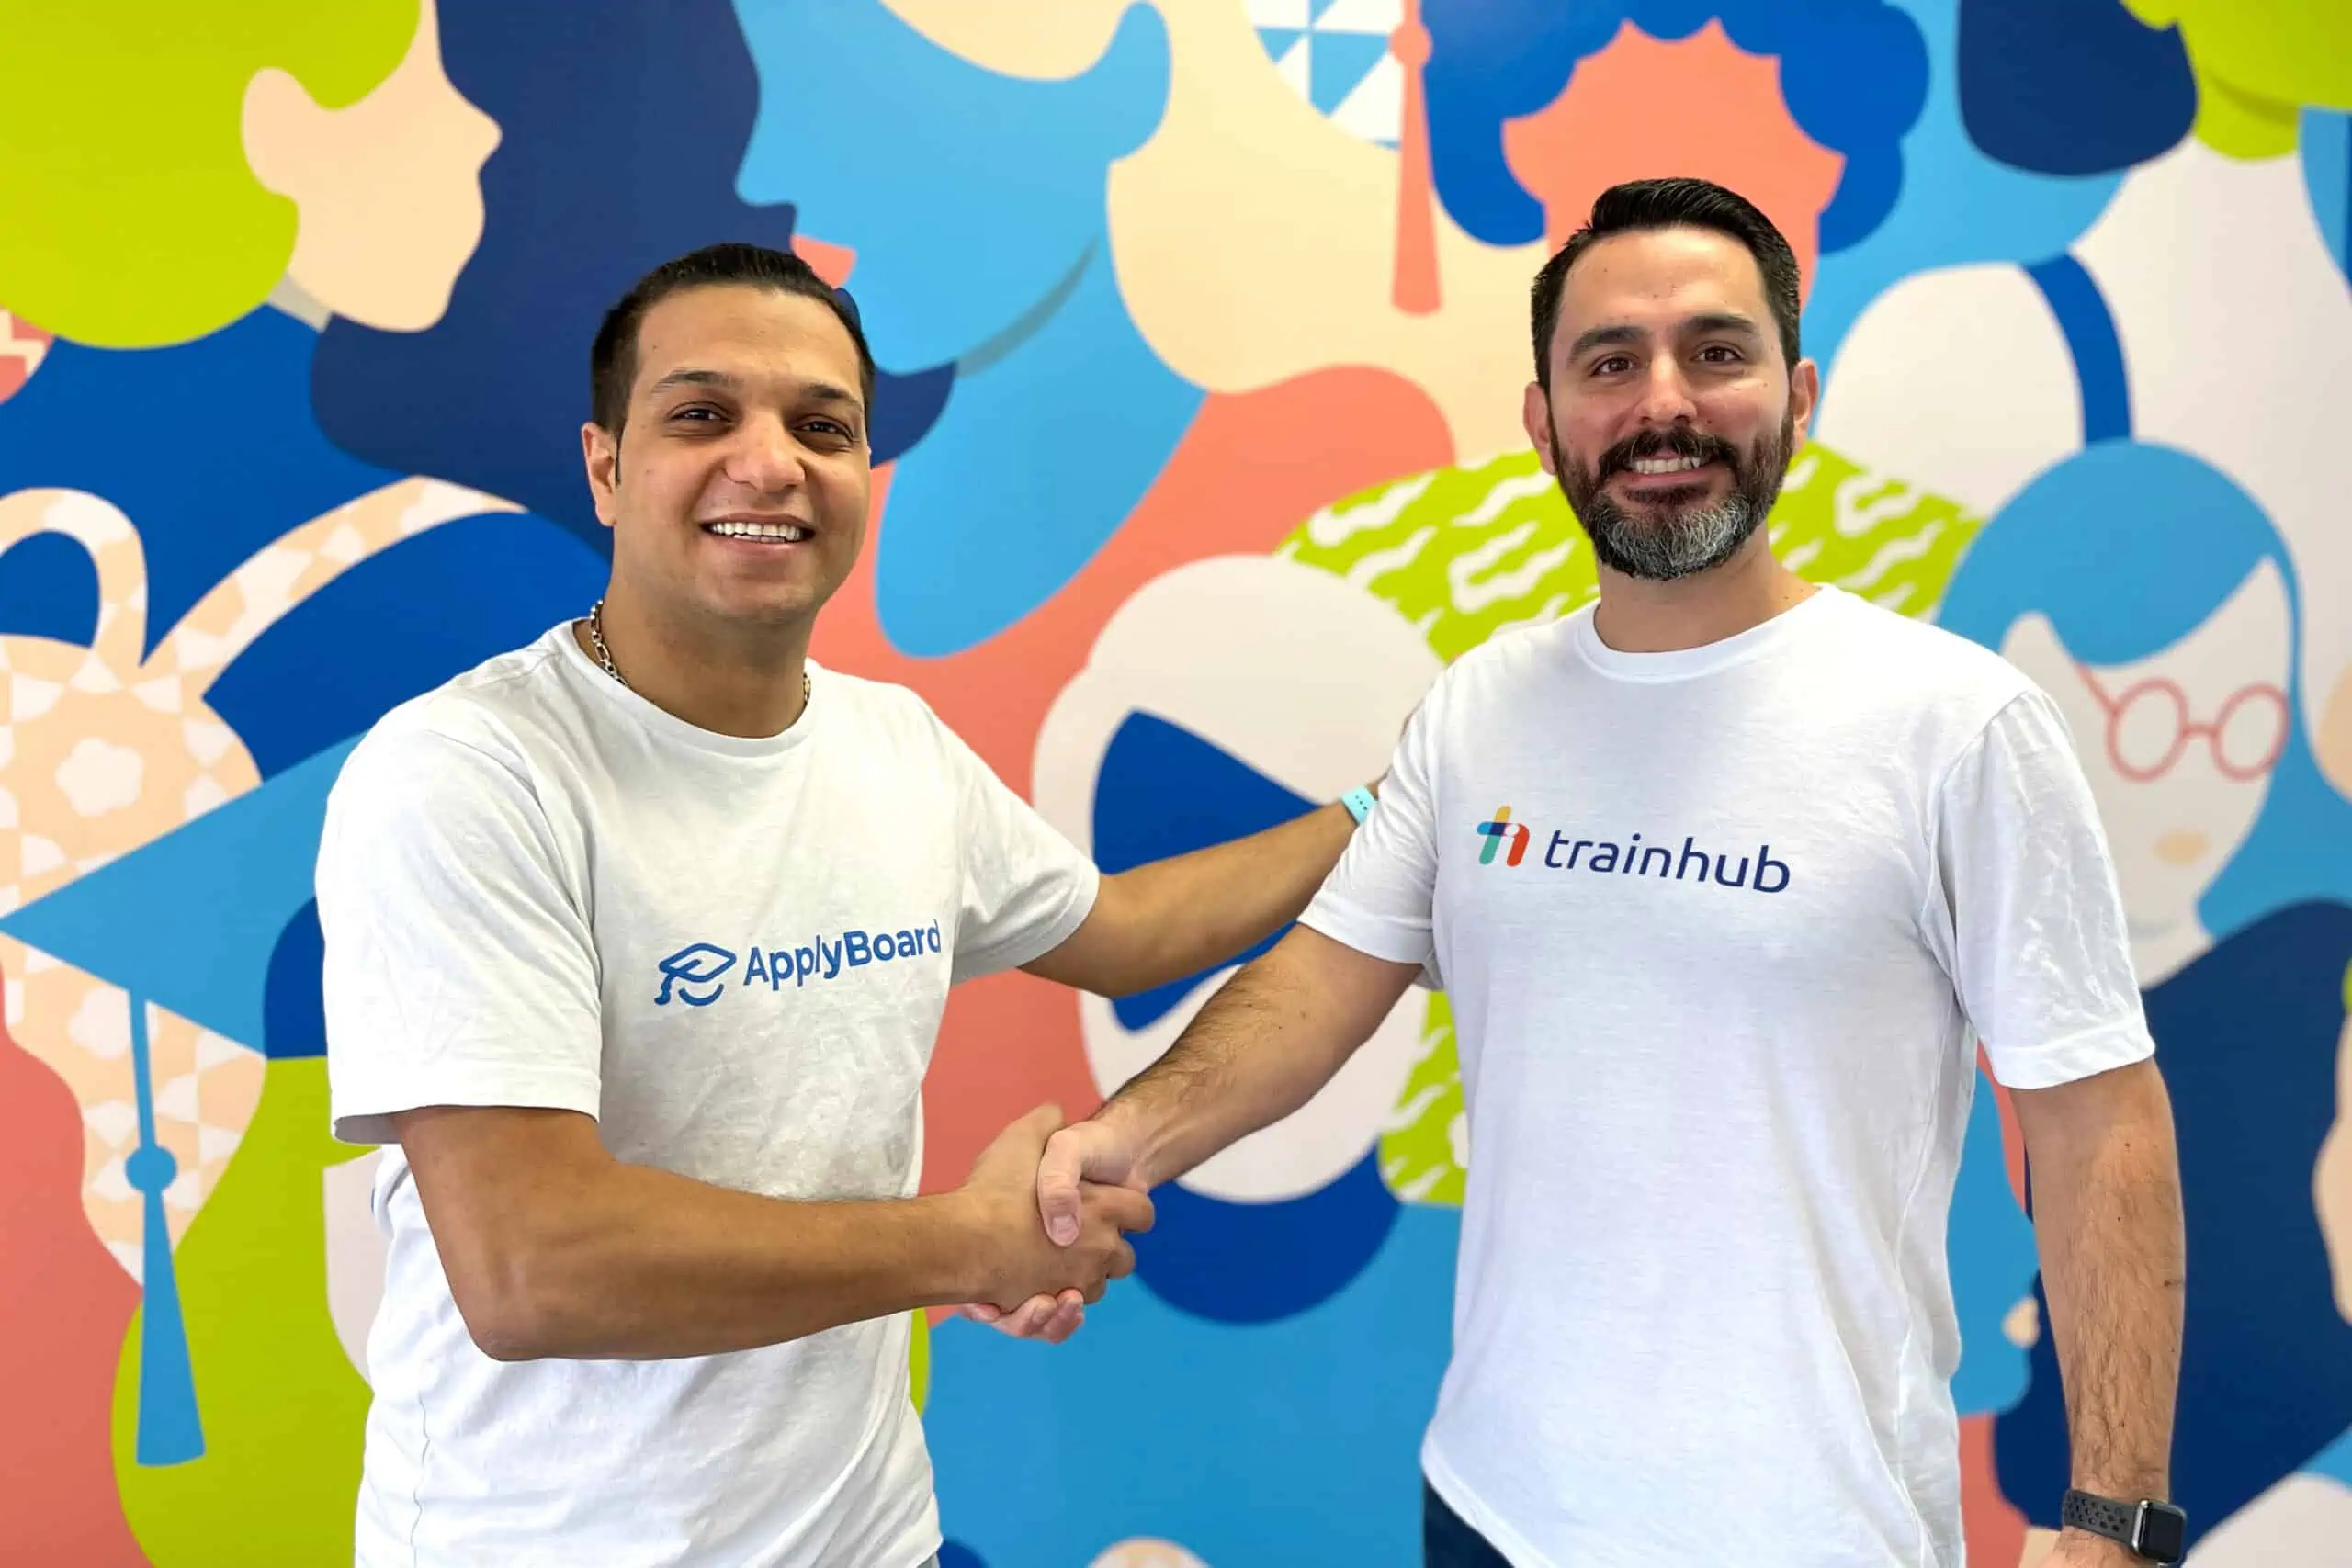 Meti Basiri and Jimmy Battaglia shaking hands to celebrate ApplyBoard acquiring TrainHub.